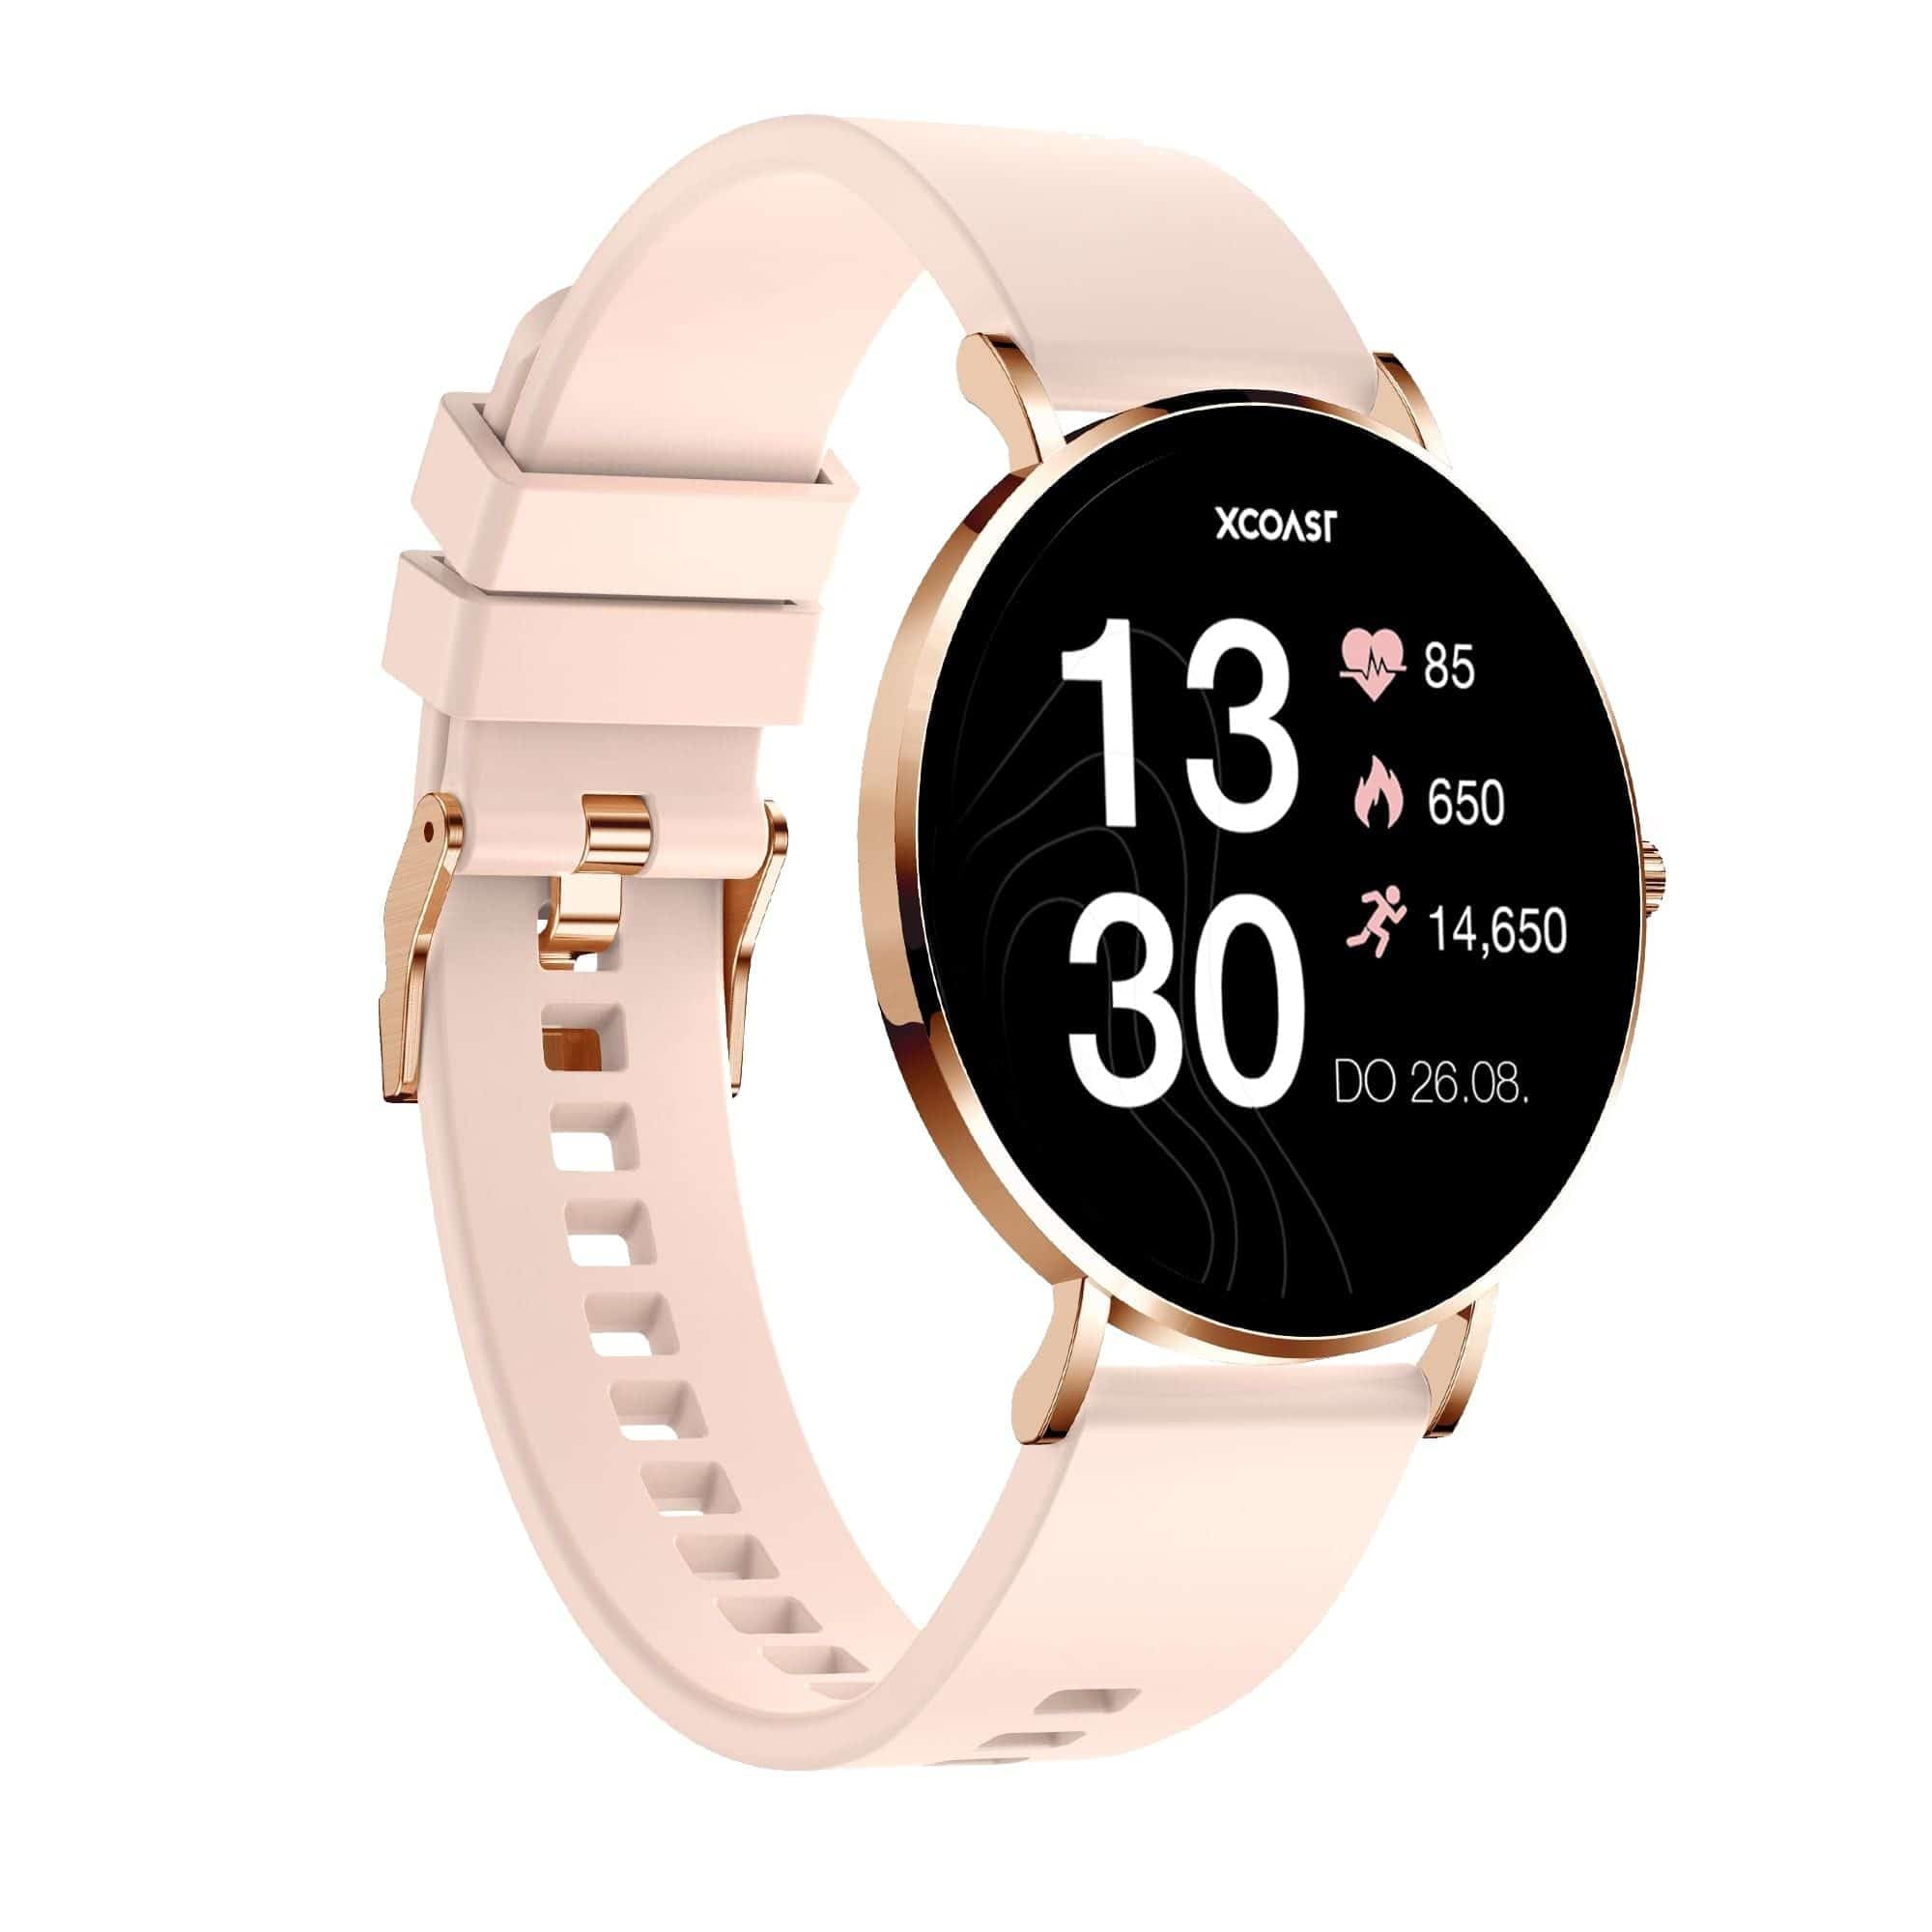 XCOAST SIONA 2 Damen Smartwatch, 1,3 Zoll AMOLED Display, iOS und Android, Frauen Fitnesstracker, Pulsuhr, 21 Sportmodi, Blutsauerstoff, Blutdruck, Wetter, 7 Tage Akku